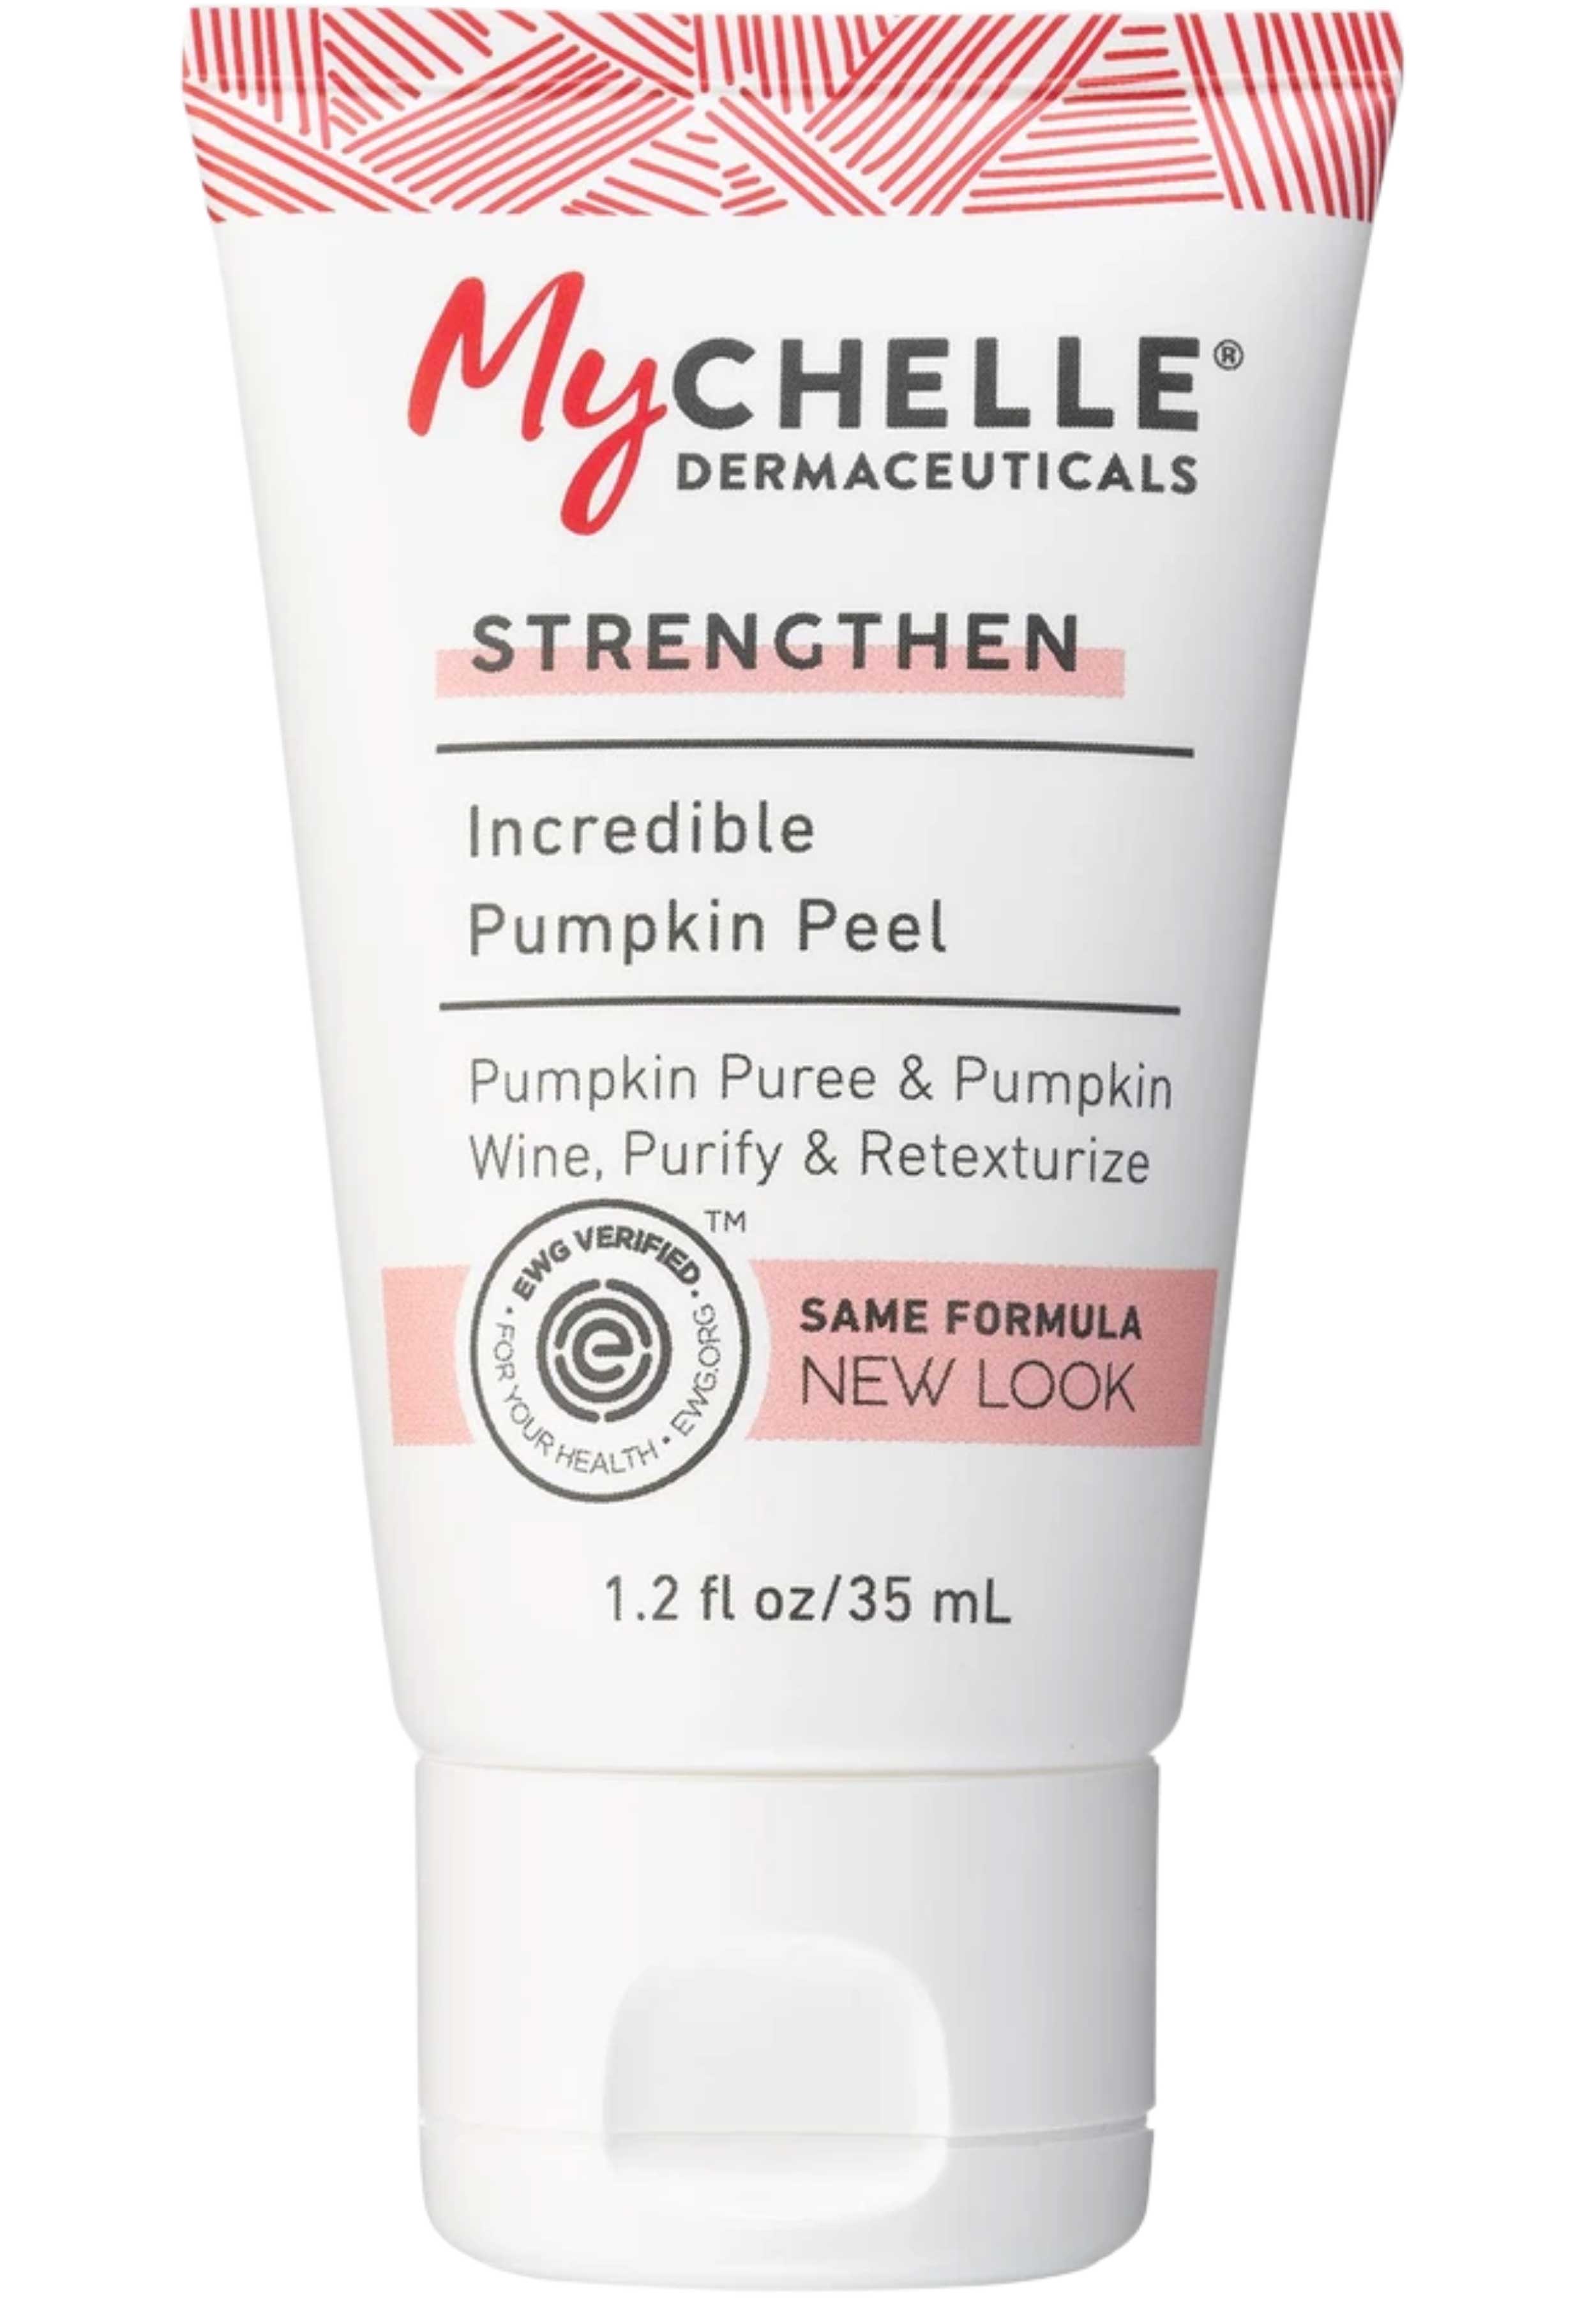 MyChelle Dermaceuticals Incredible Pumpkin Peel